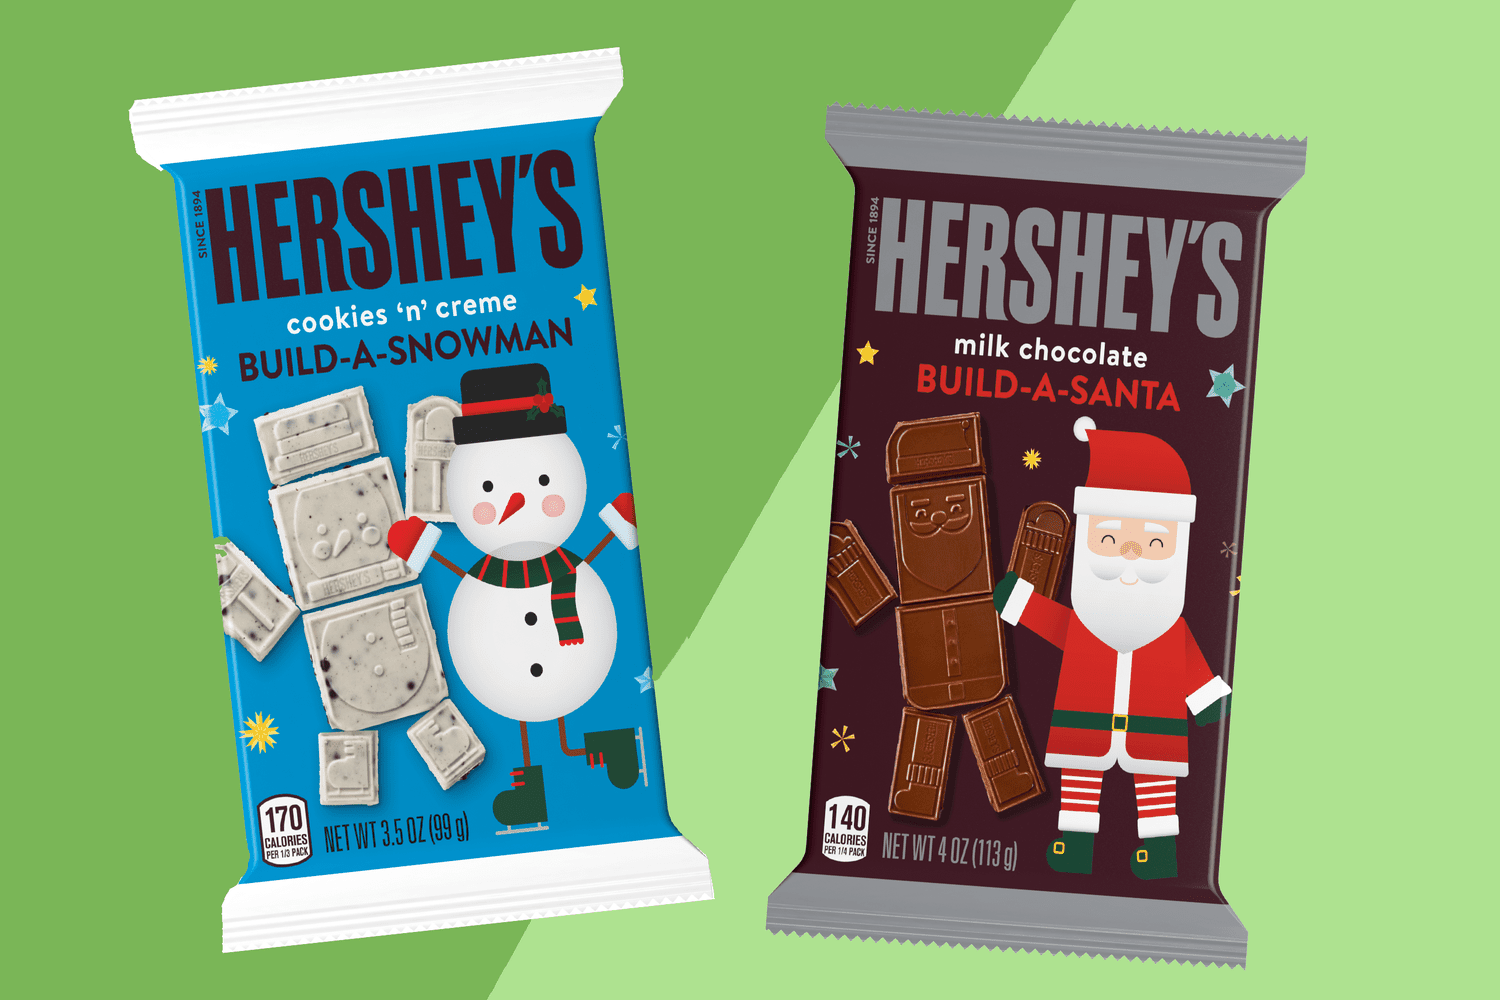 Hershey's Milk Chocolate Build-a-Santa and Hershey's Cookies 'N' Cream Build-a-Snowman